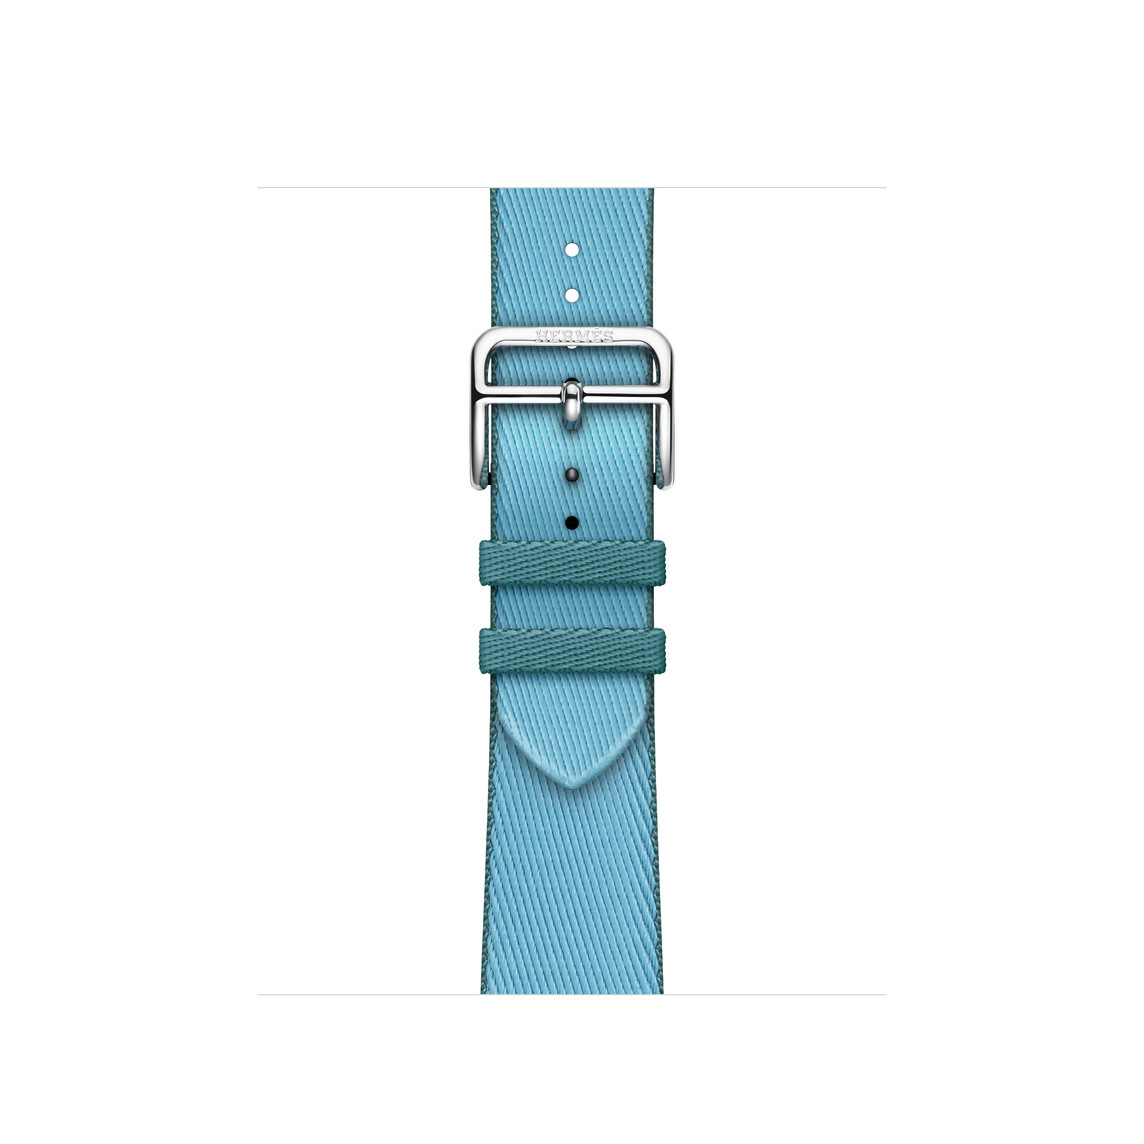 Bleu Céleste/Bleu Jean (blue) Twill Jump Single Tour strap, woven textile with silver stainless steel buckle.